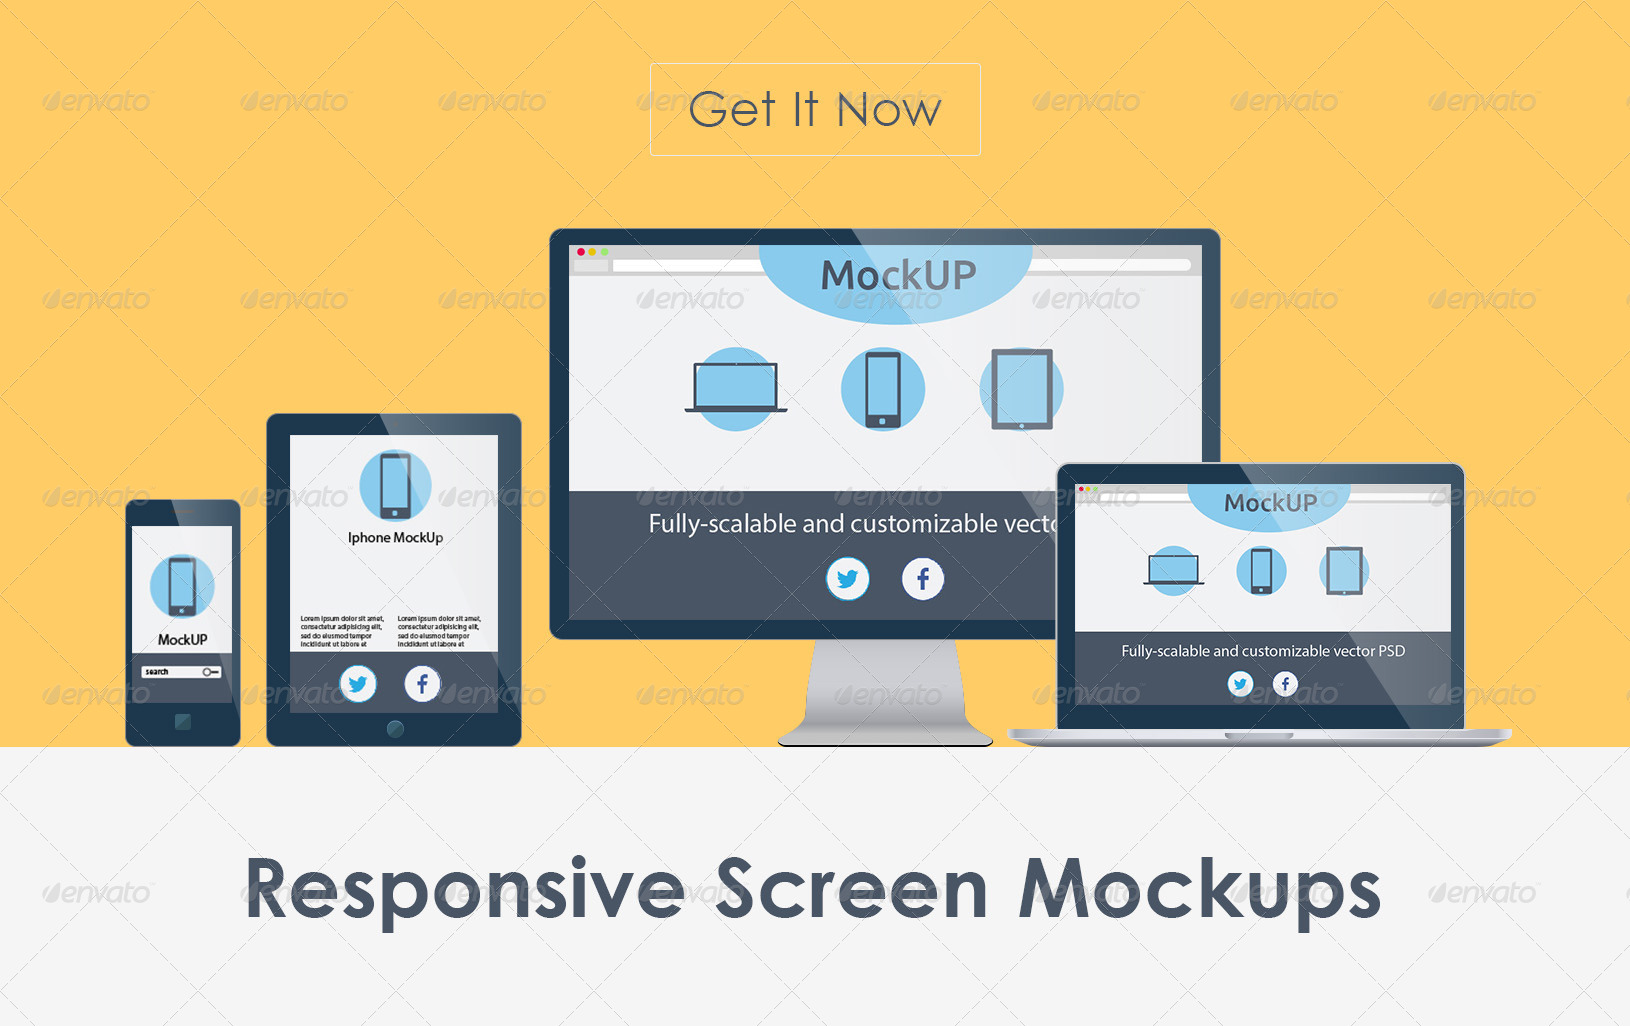 Device Mockups Responsive by danaco | GraphicRiver